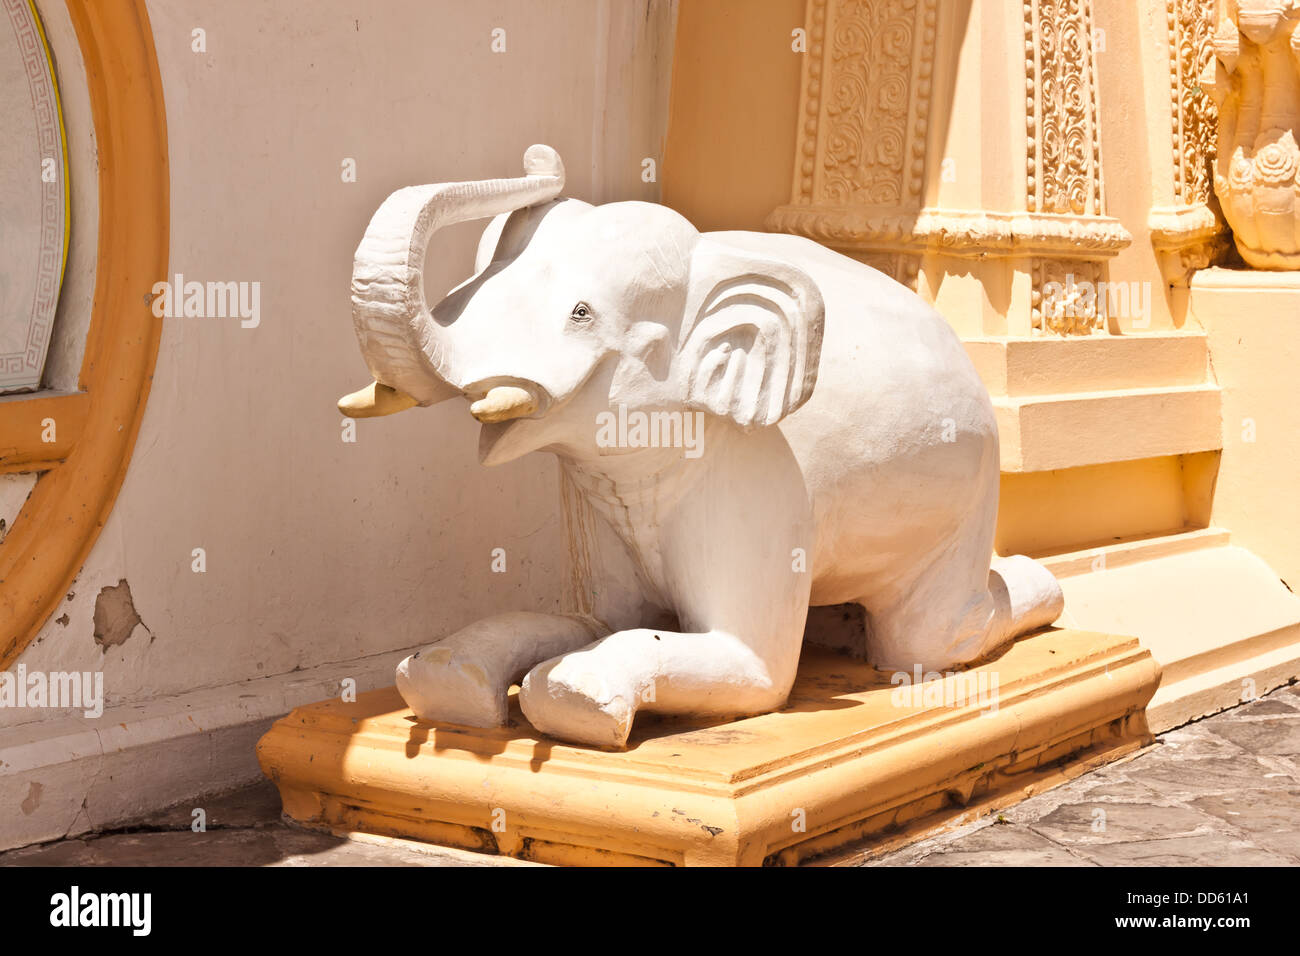 elephant statue in thailand Stock Photo